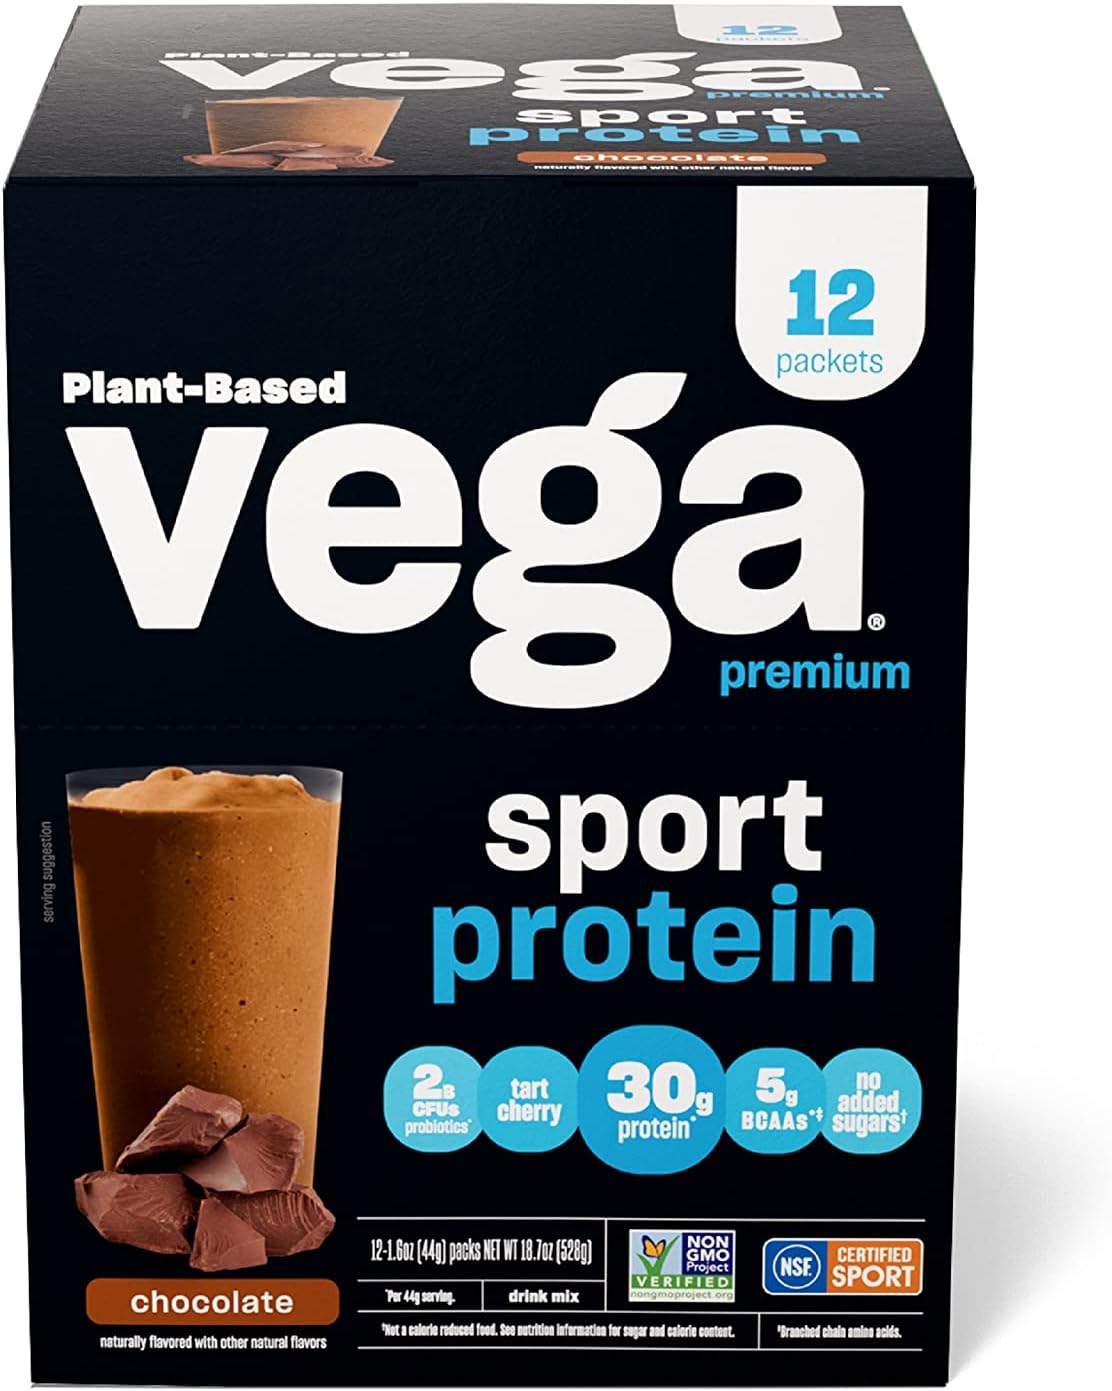 Vega Sport Premium Vegan Protein Powder, Chocolate - 30g Plant Based P